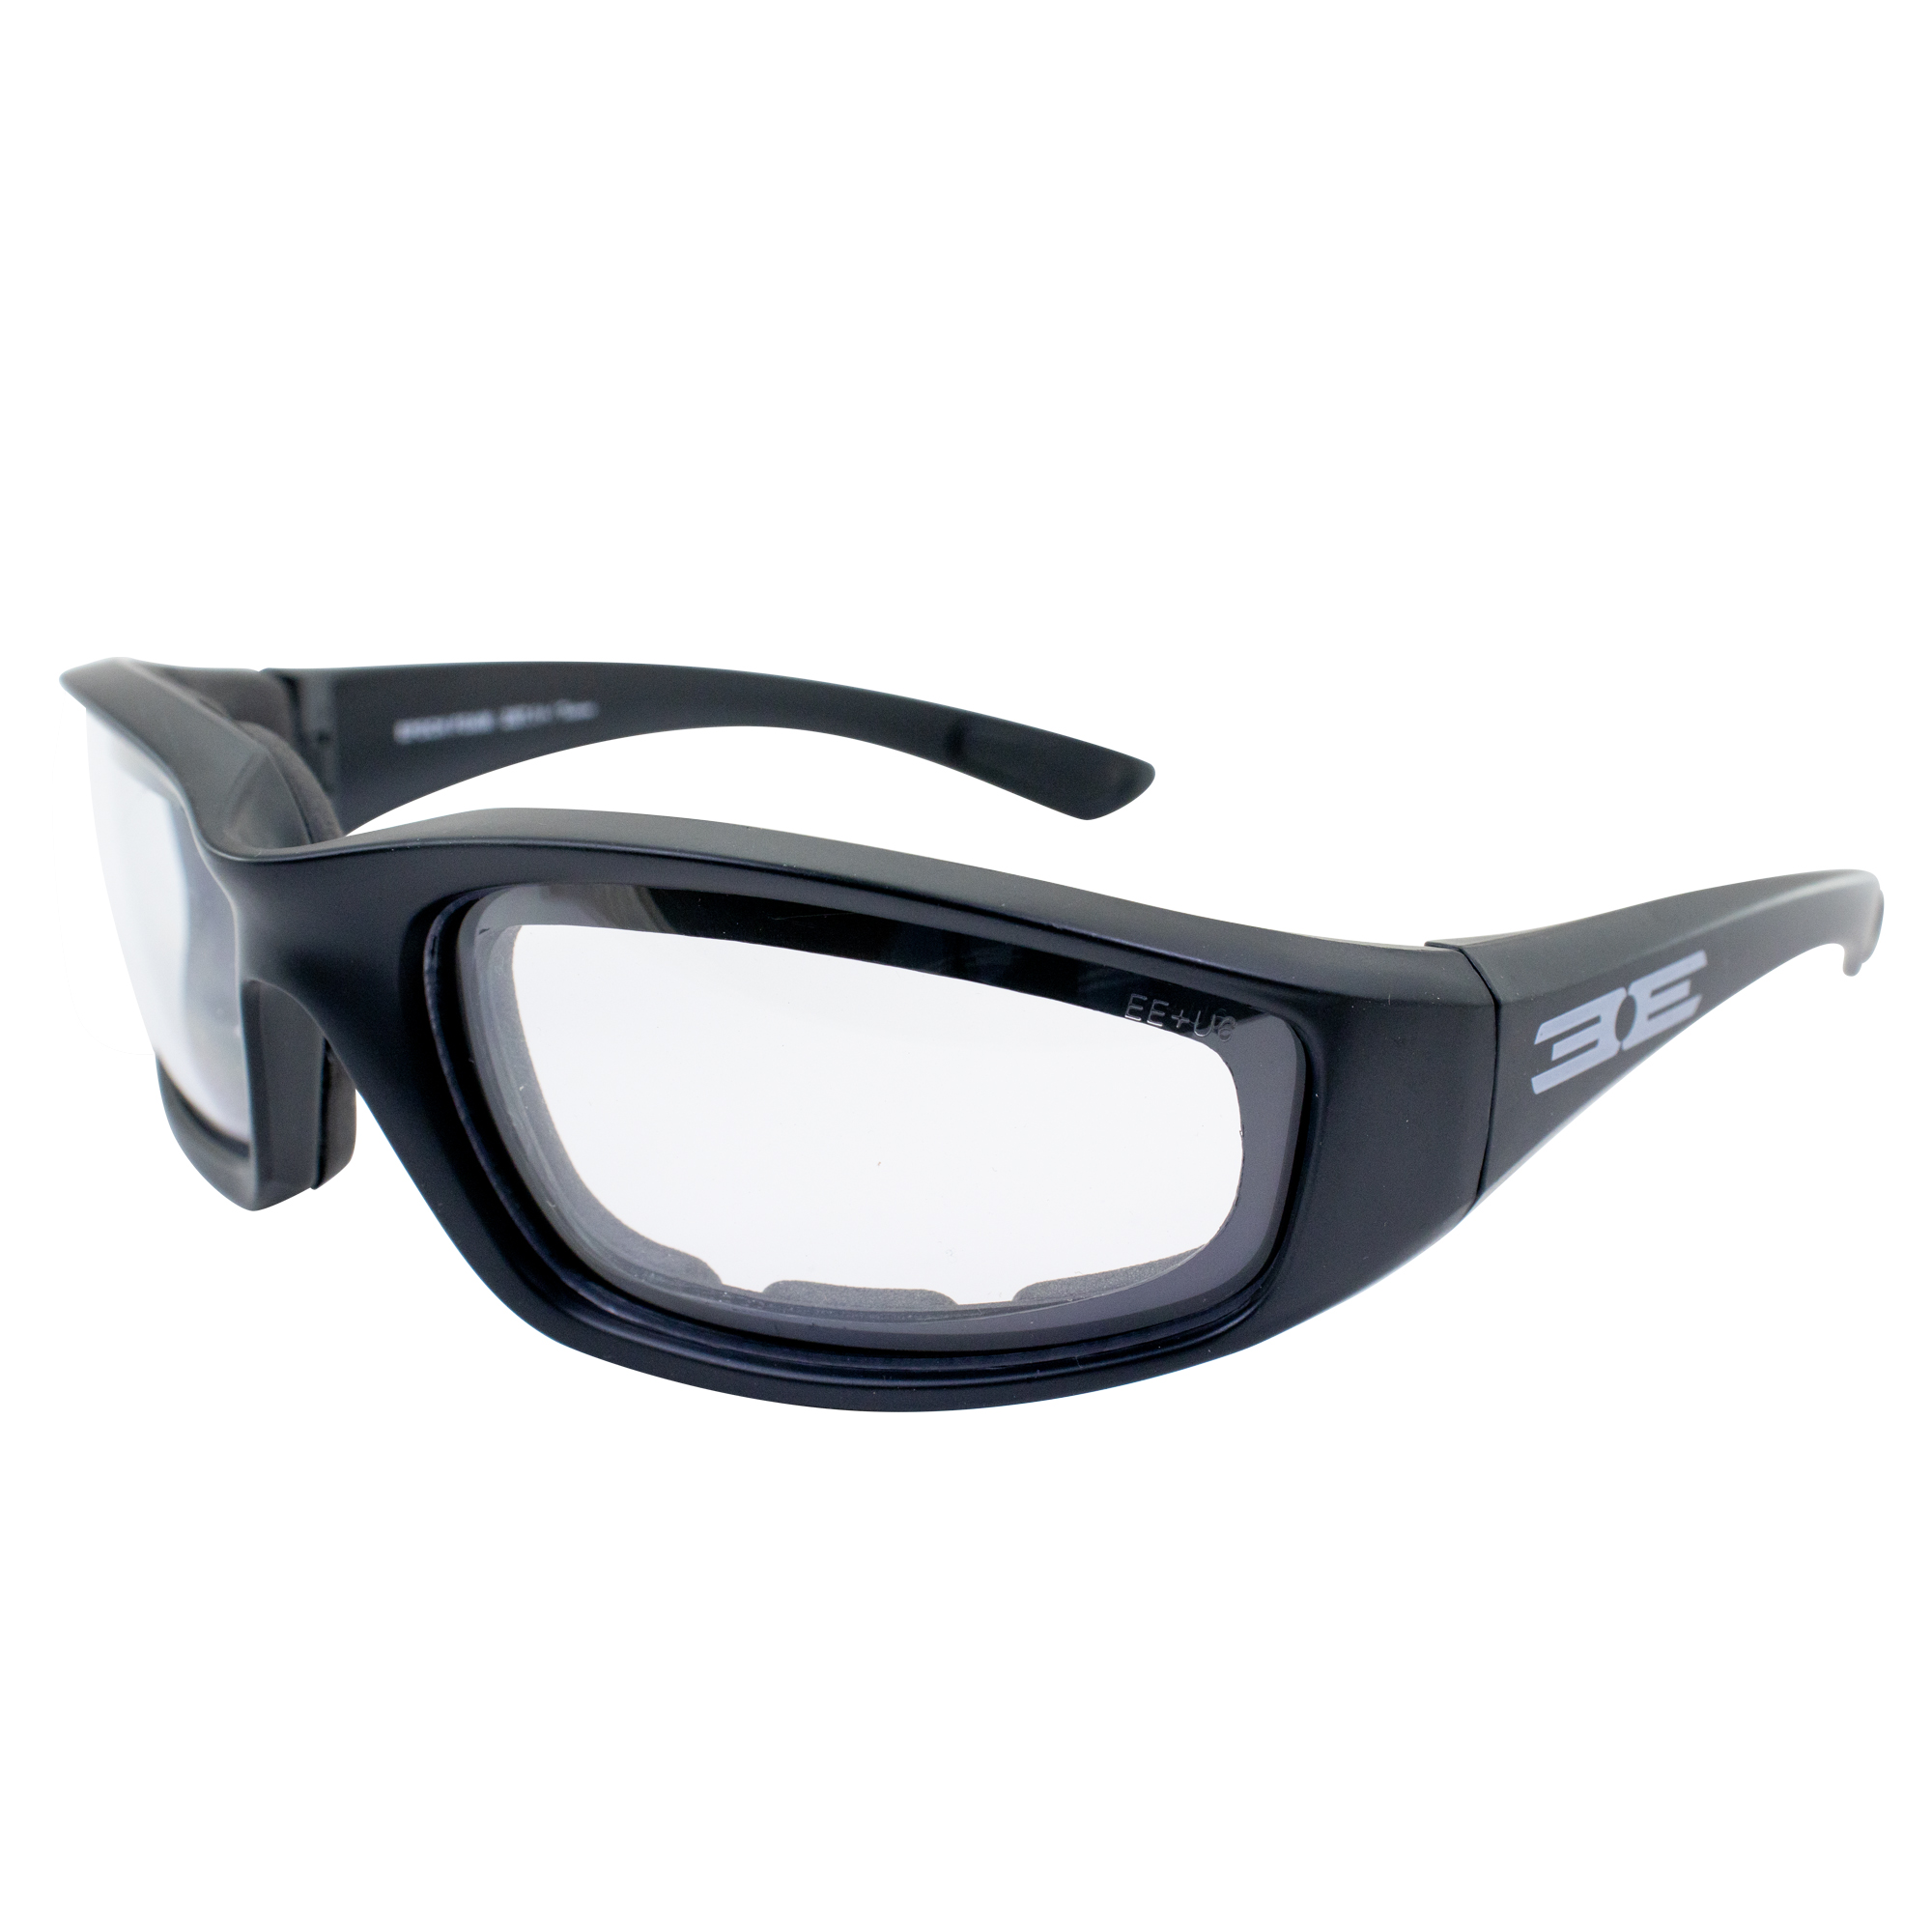 EPOCH Padded Motorcycle Sunglasses Black Frames Clear Lens ANSI Z87.1+ - image 1 of 8